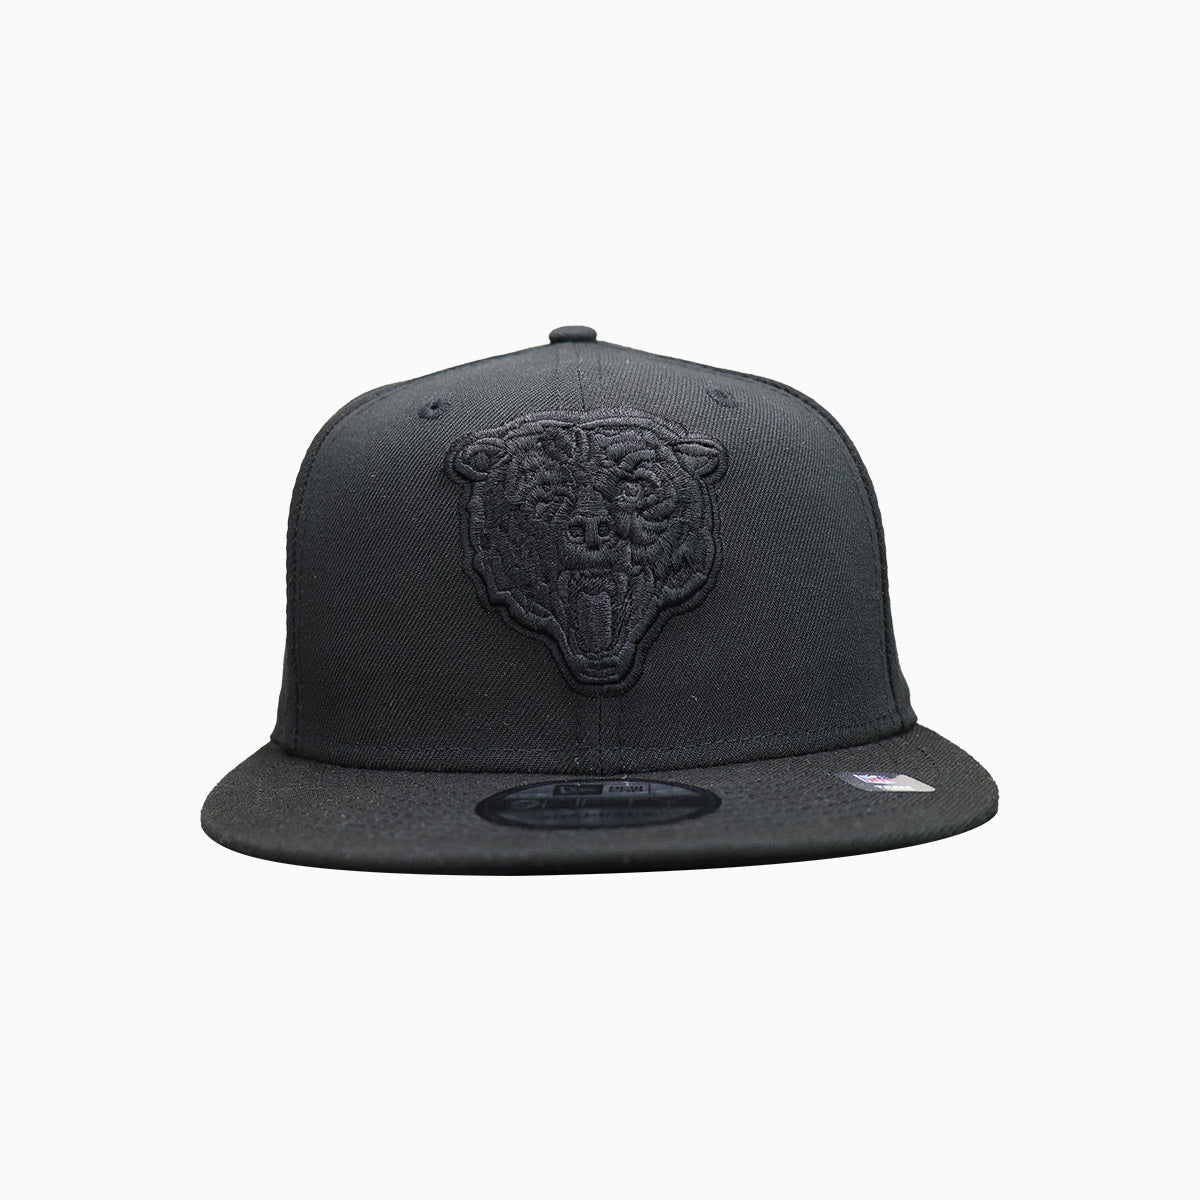 New Era Chicago Bears Black & White 9FIFTY Snapback Hat